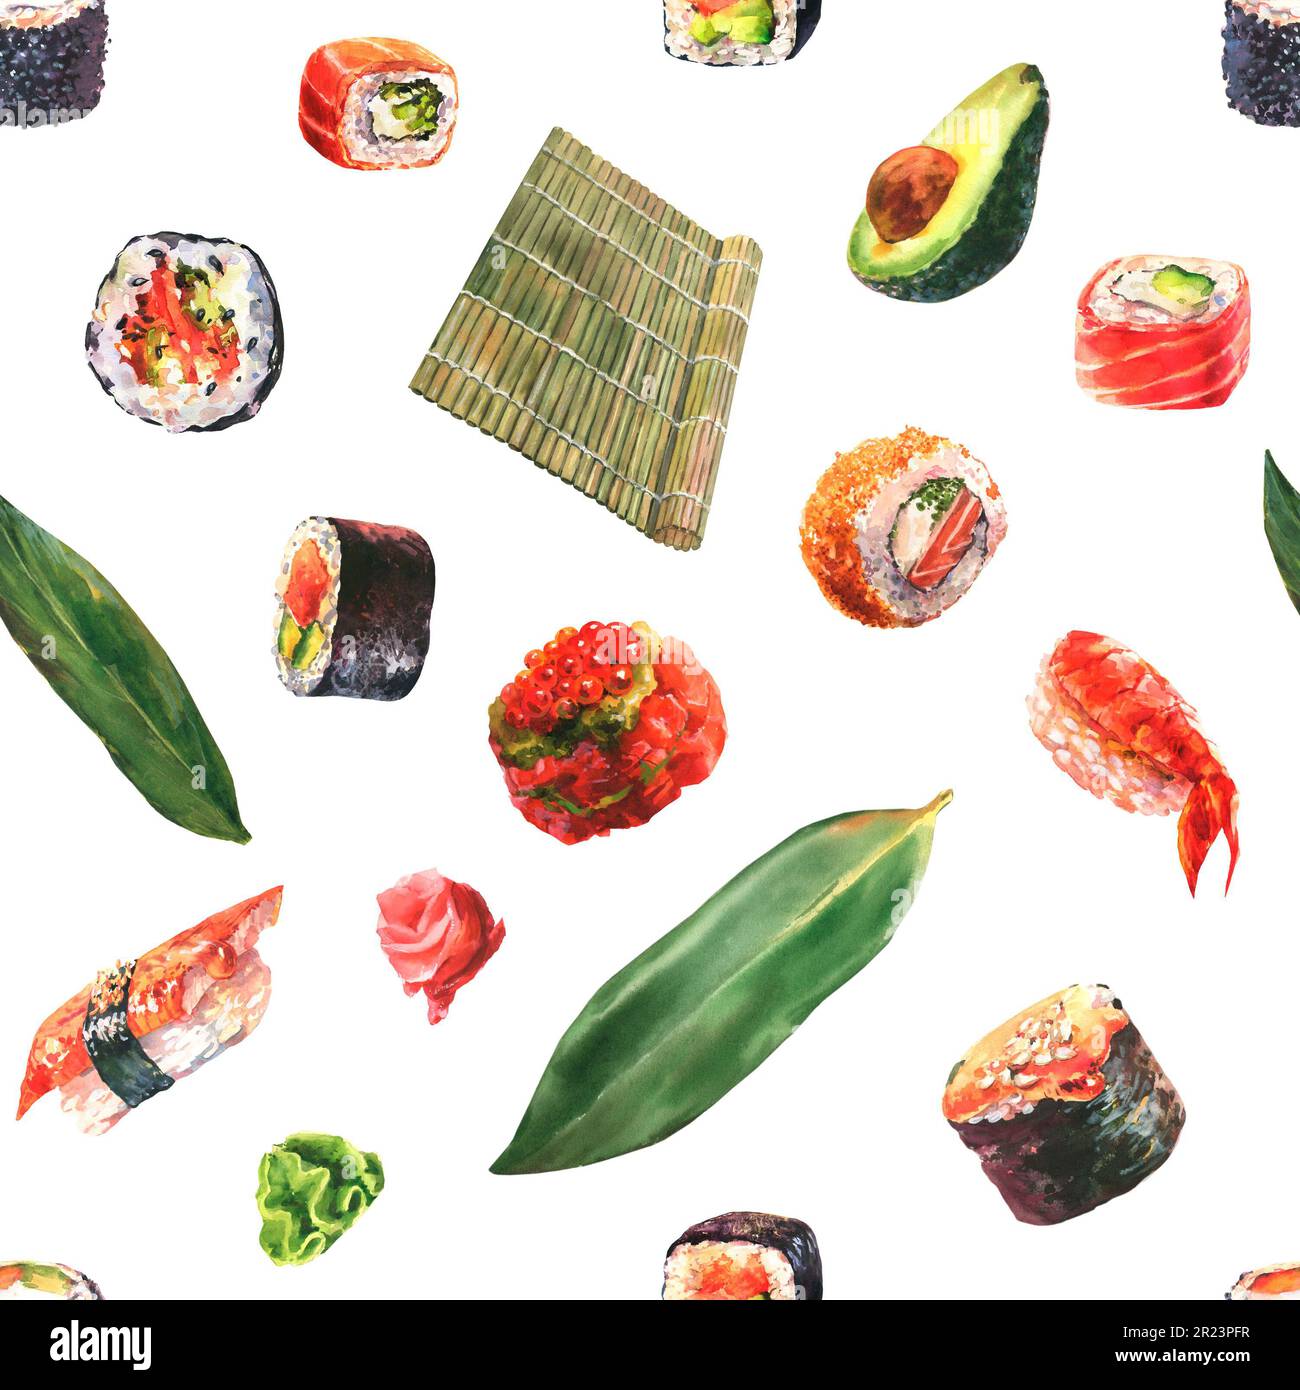 https://c8.alamy.com/comp/2R23PFR/seamless-watercolor-pattern-with-sushi-rolls-nigiri-gunkan-shrimp-tuna-wasabi-bamboo-sushi-mat-on-a-white-background-2R23PFR.jpg